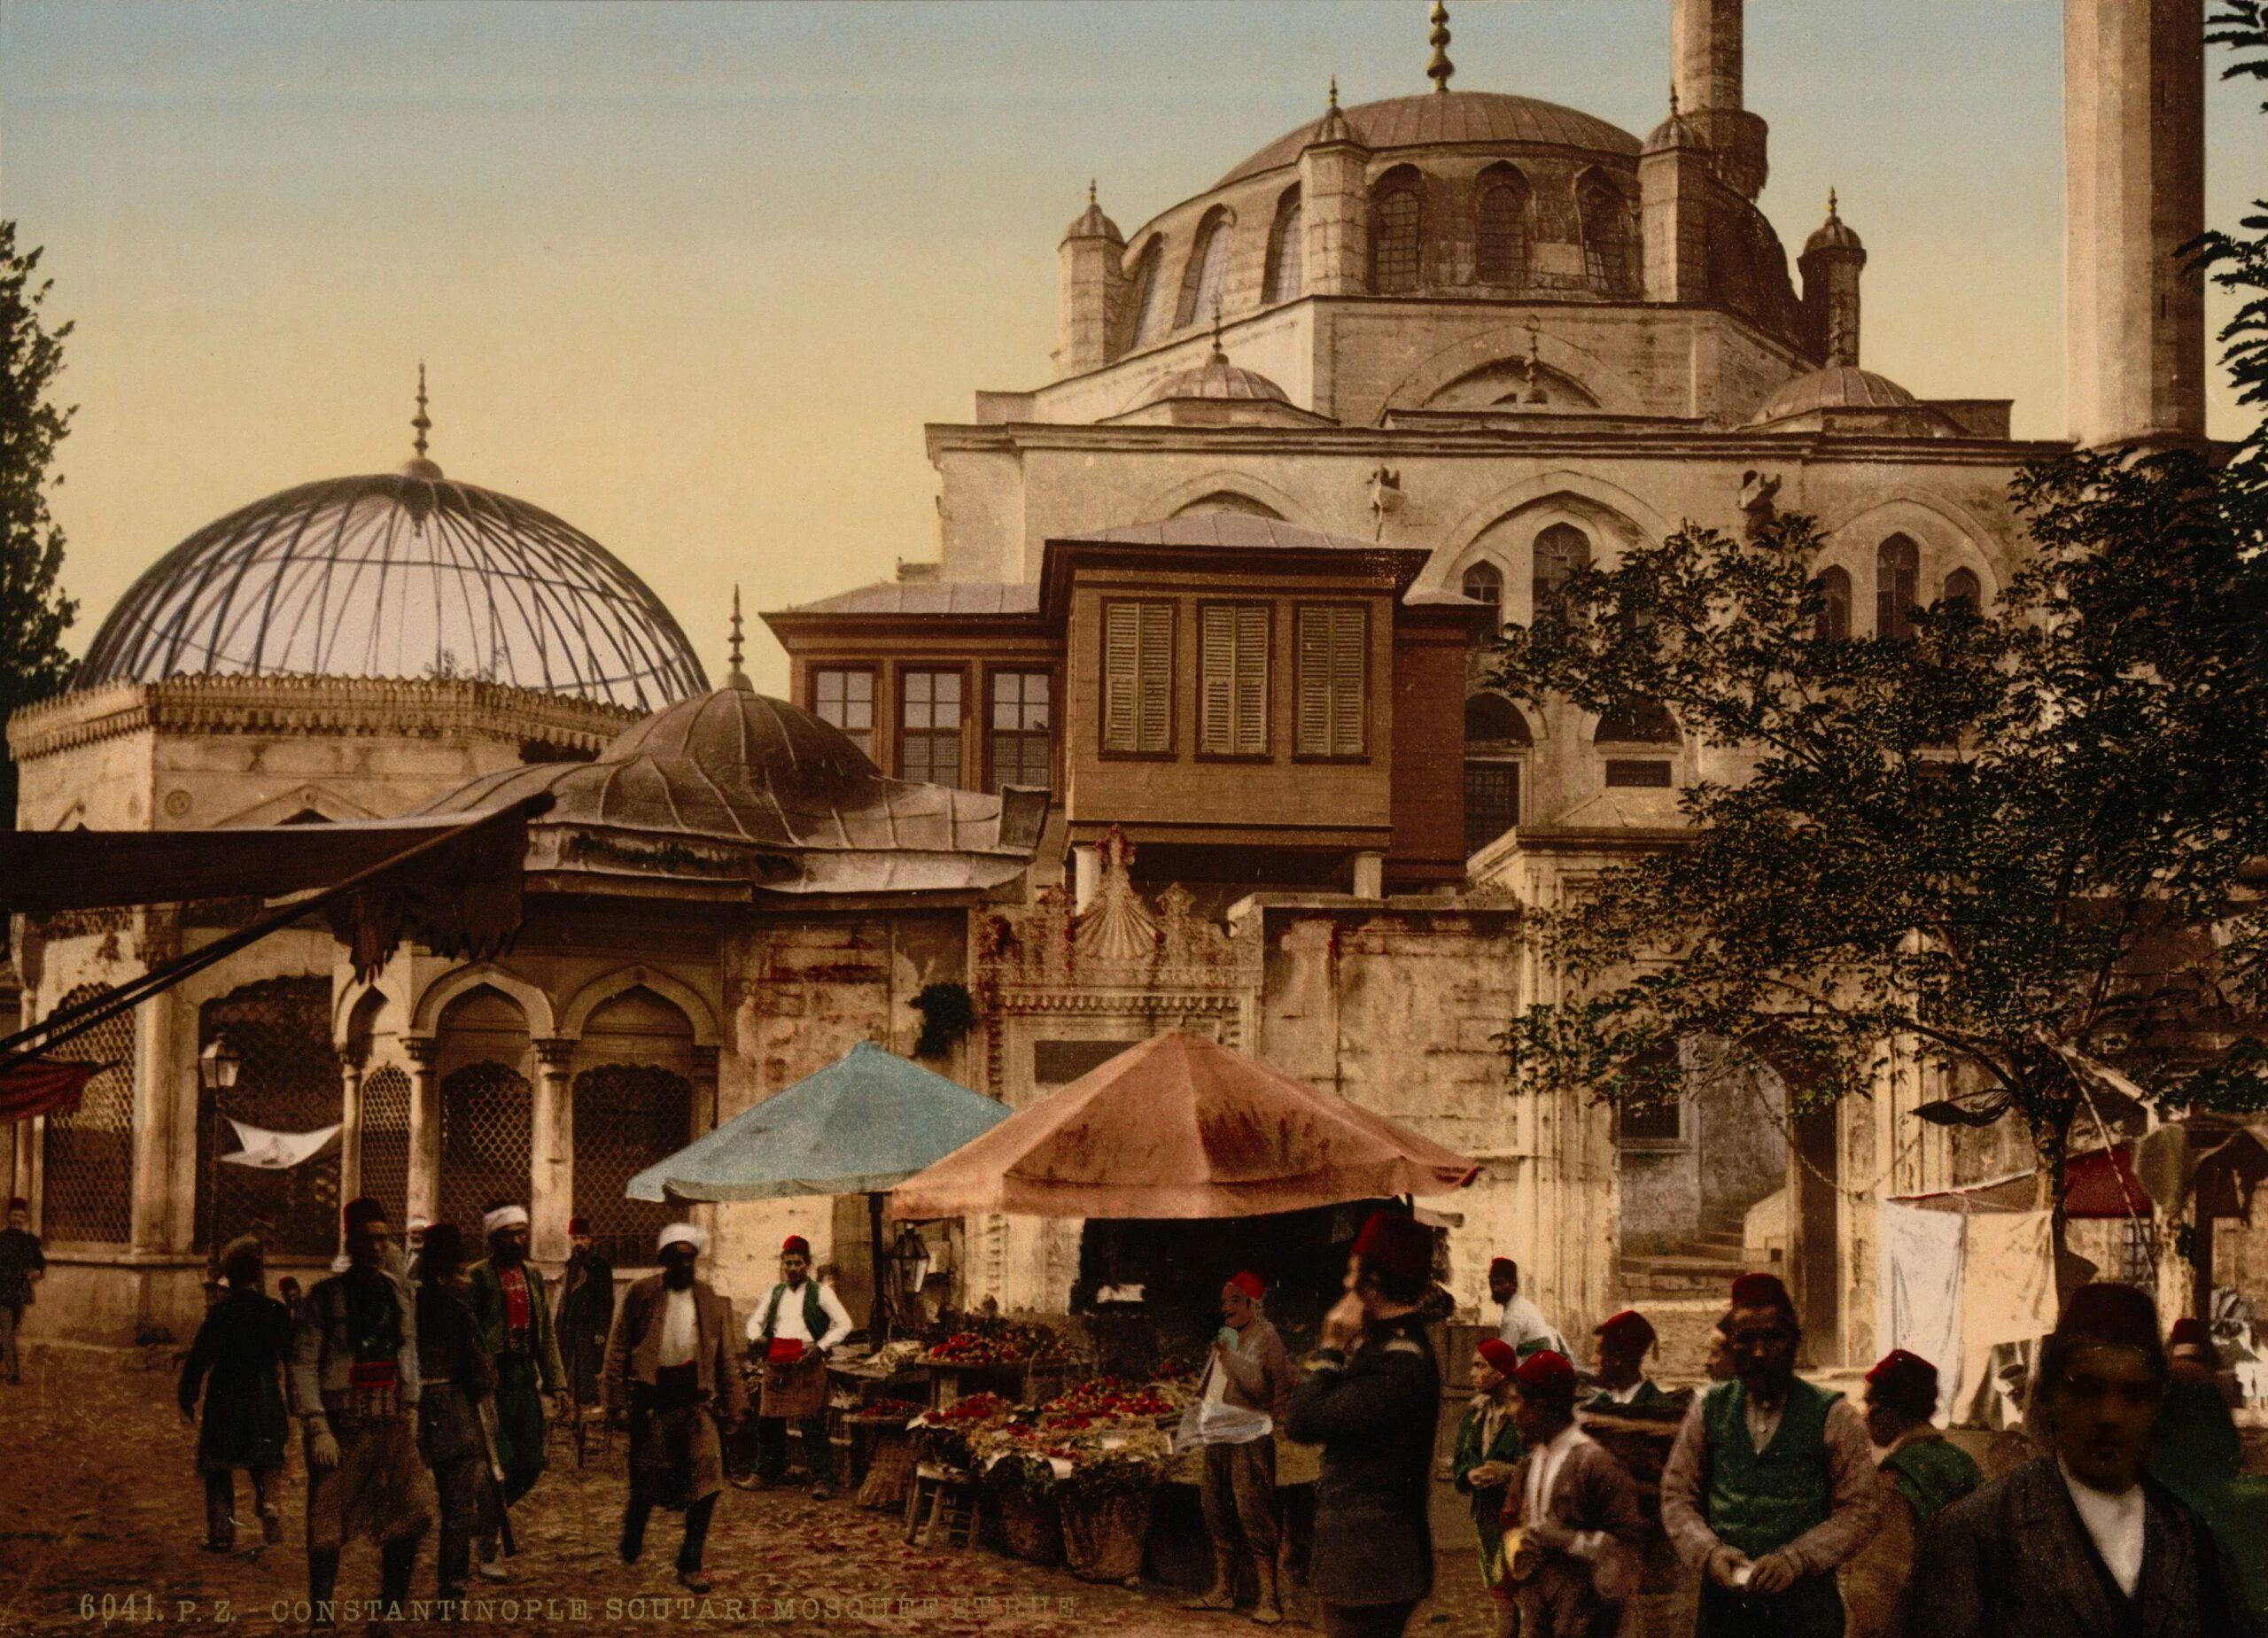 Стамбул старый город султанахмет. Османская Империя Стамбул 19 век. Константинополь Османская Империя. Турция Османская Империя 19 век. Османская Империя город Константинополь Стамбула.